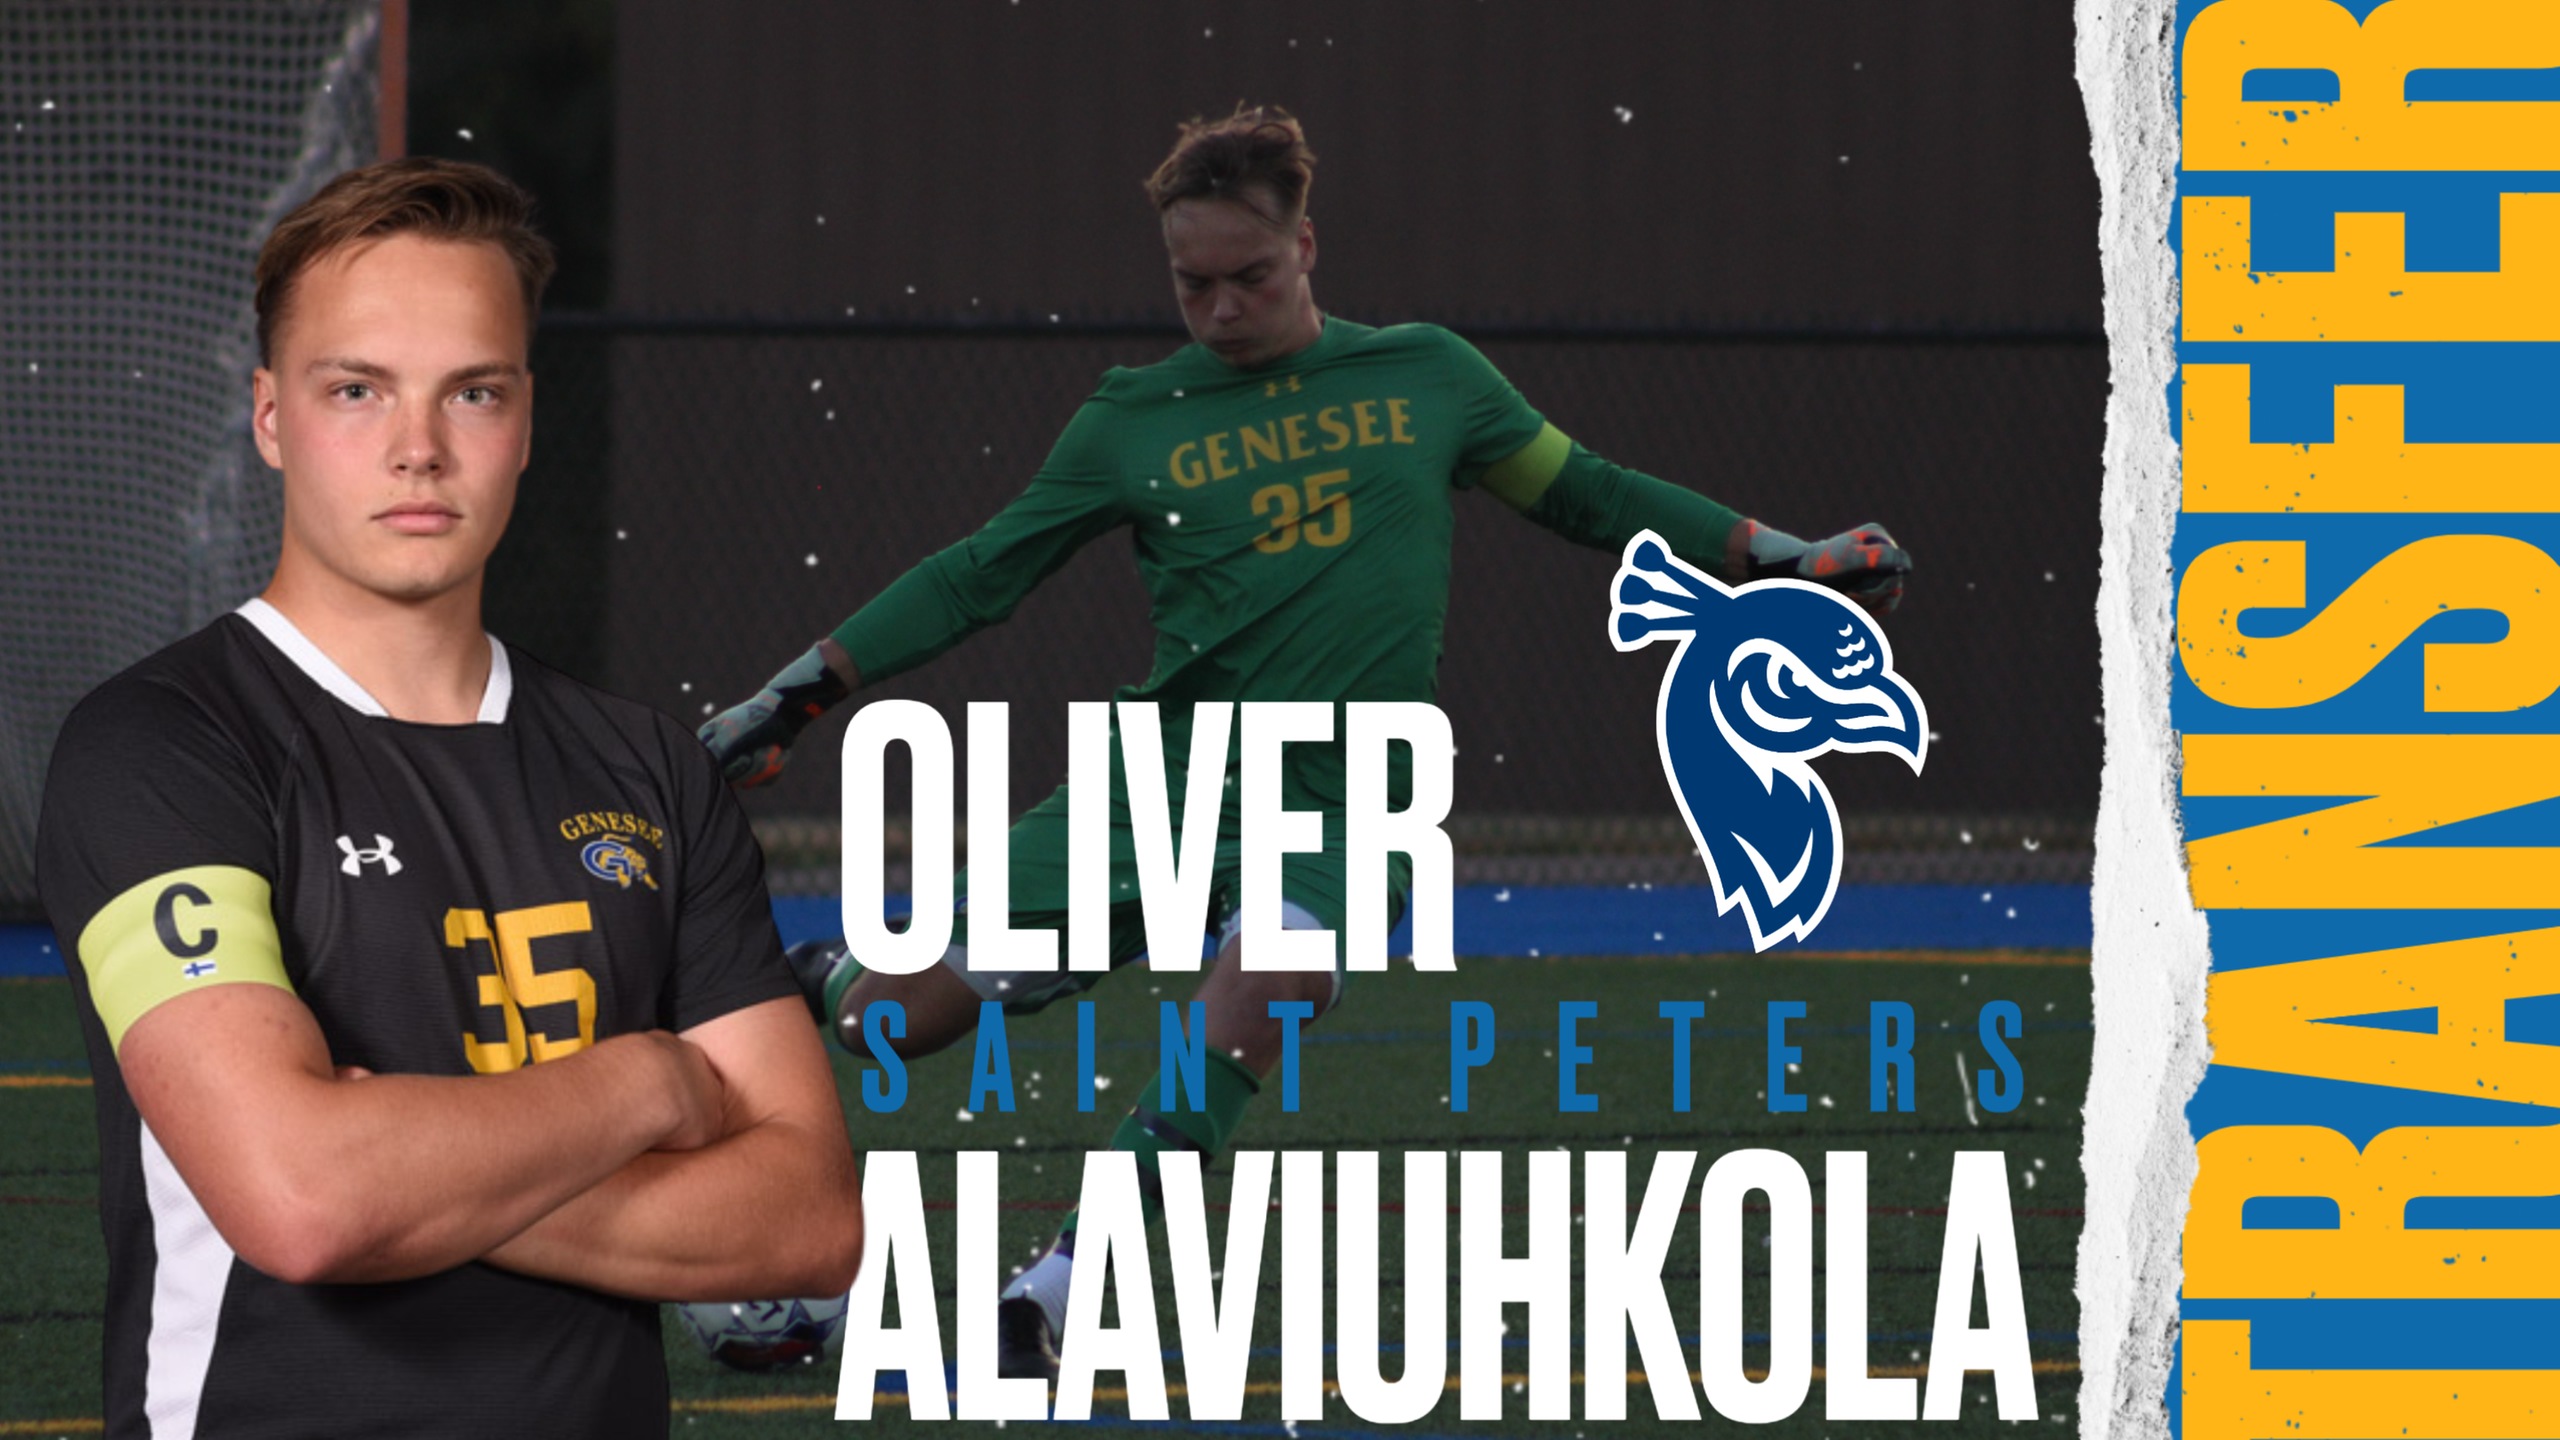 Alavuihkola Transfers to DI Saint Peters For Soccer